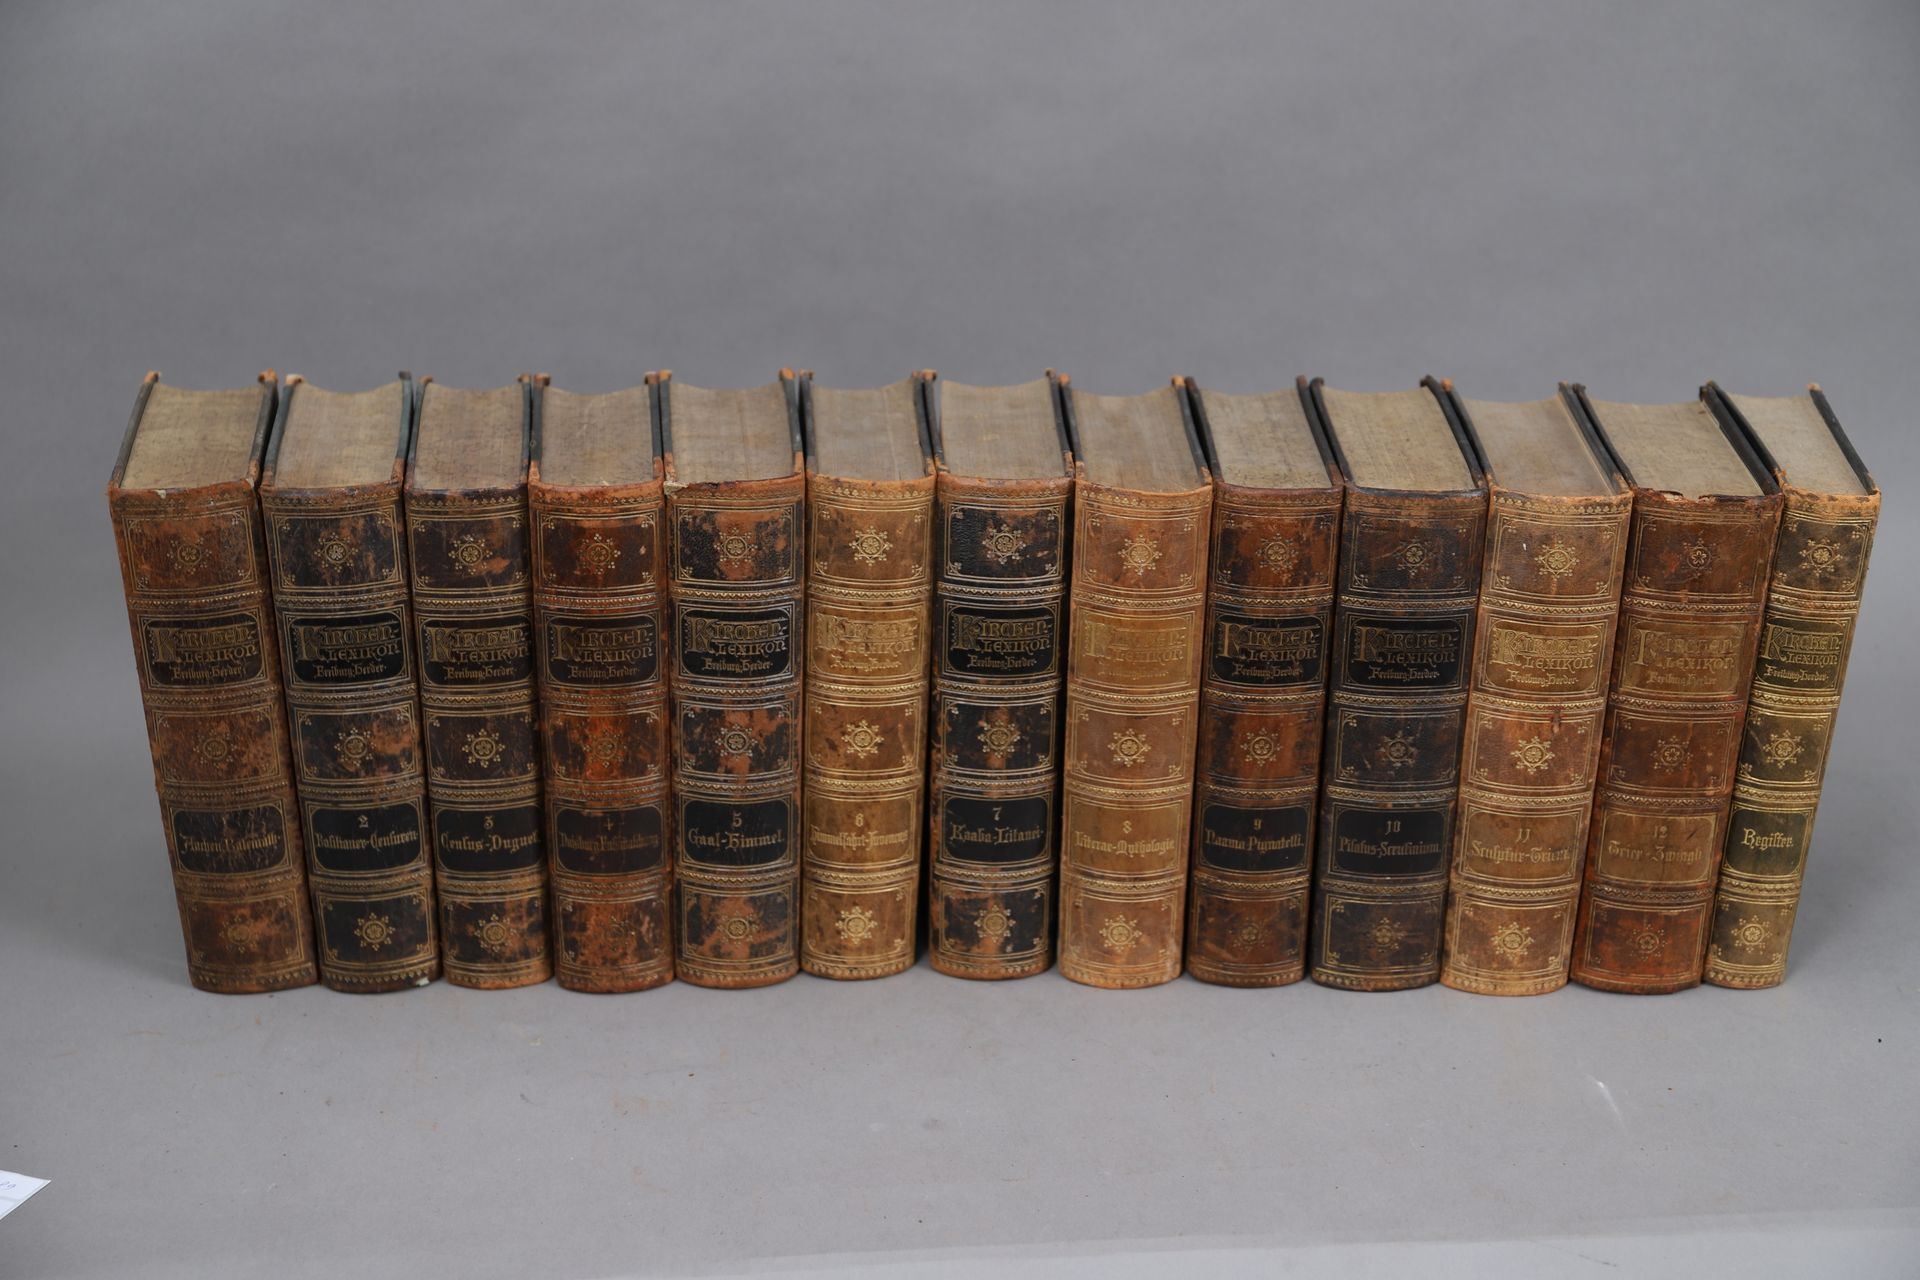 Null LAVORO RELIGIOSO in tedesco 

1884

13 volumi rilegati.